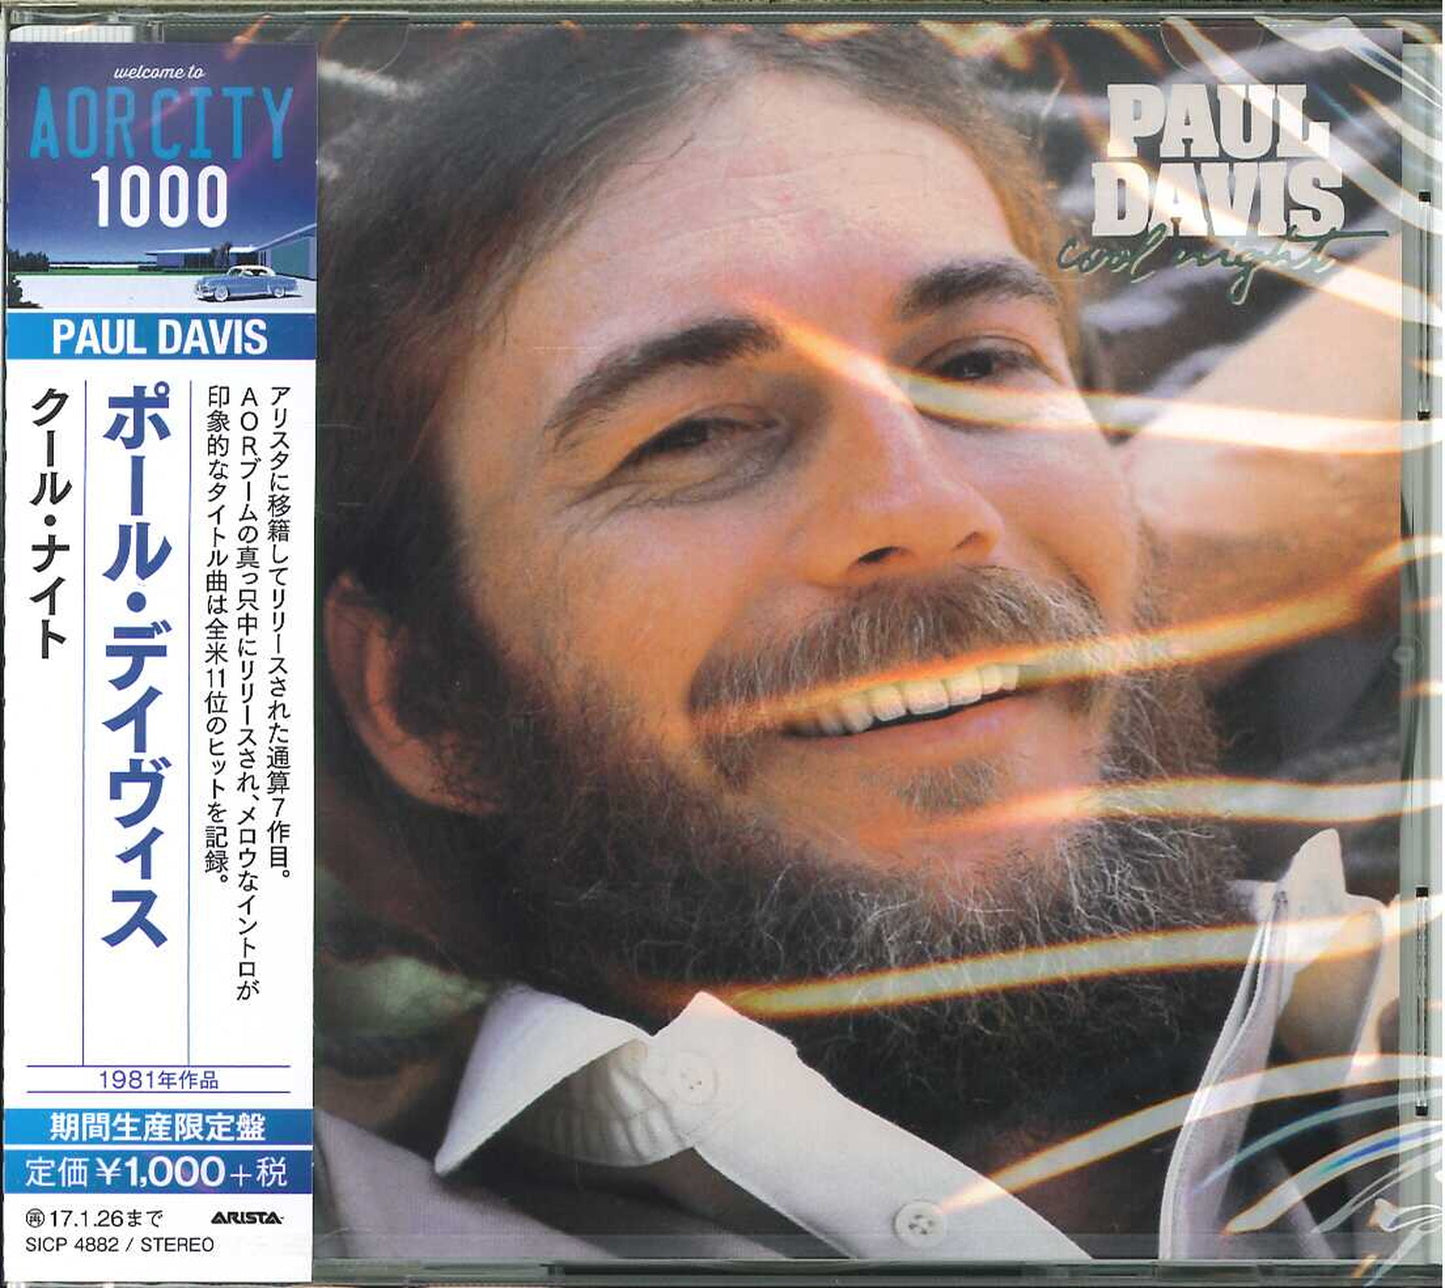 Paul Davis (Rock) - Cool Night - Japan CD Limited Edition